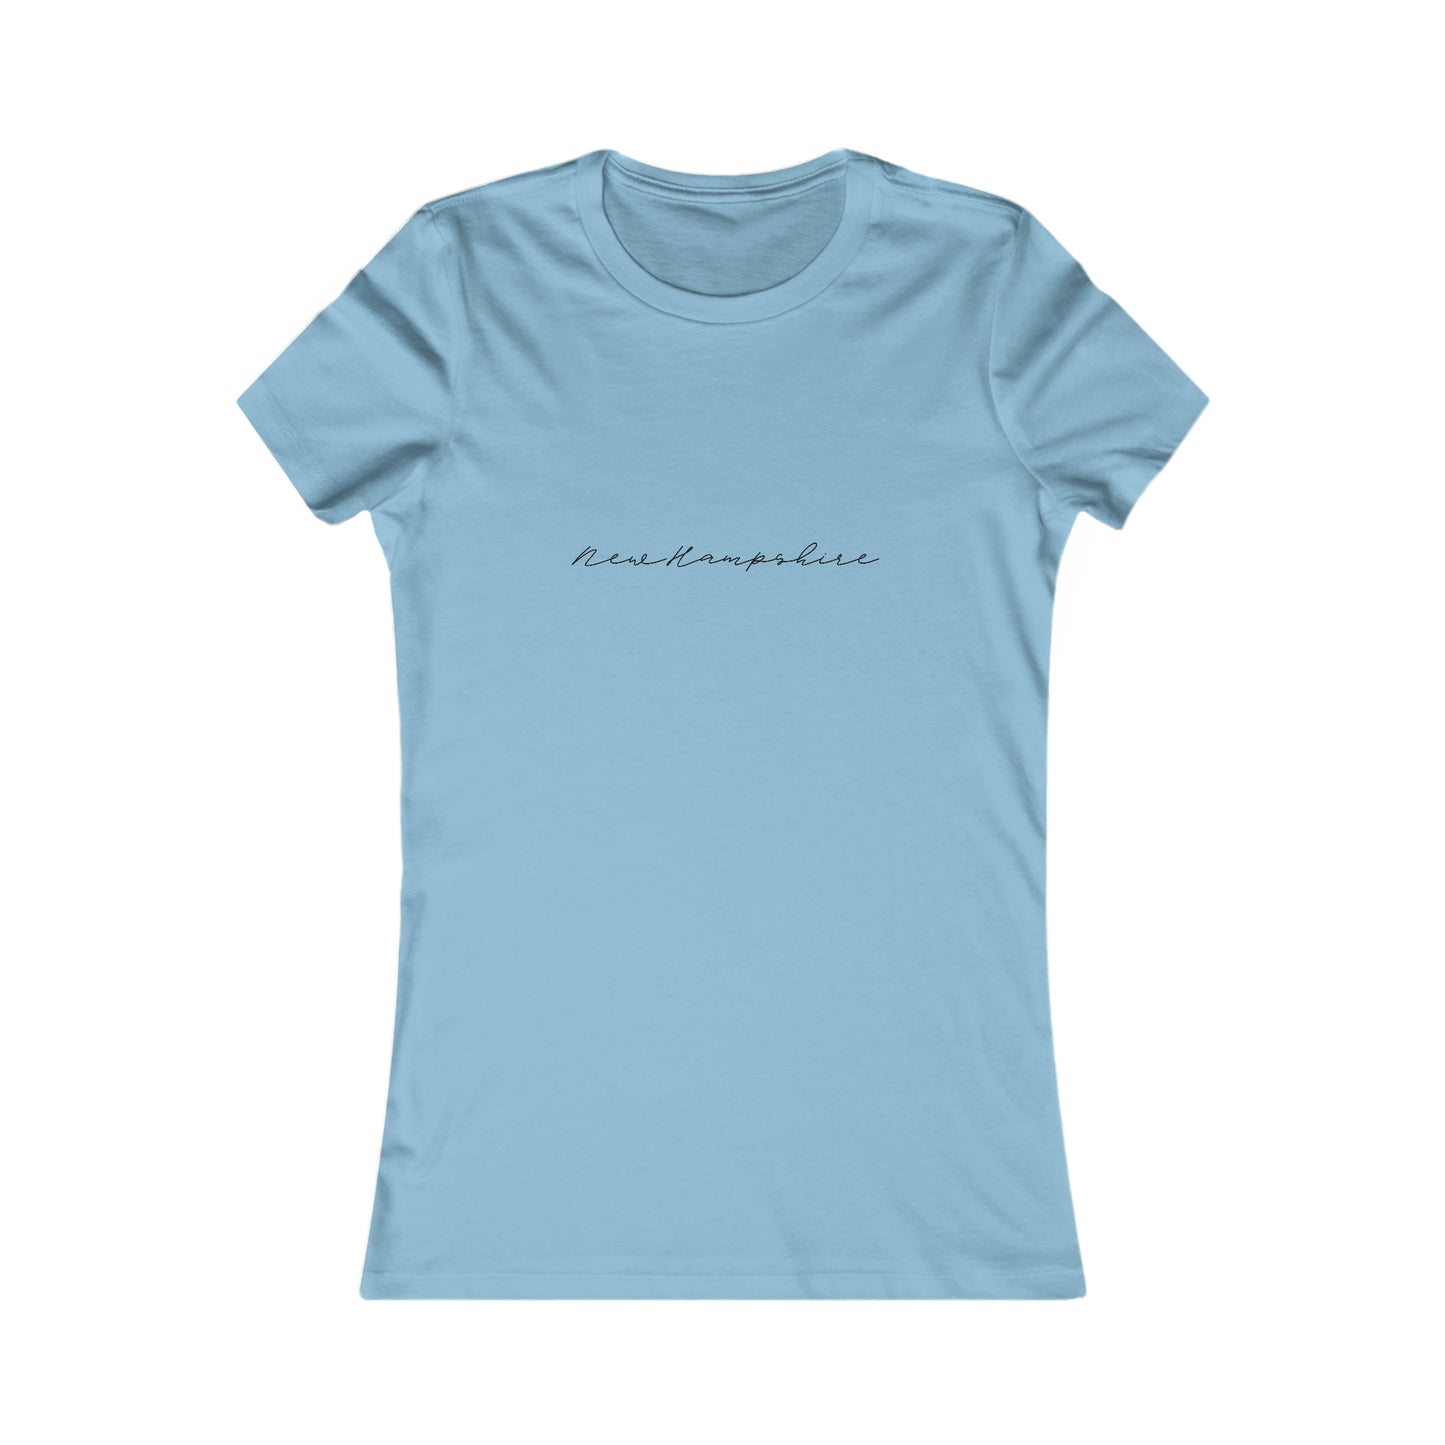 New Hampshire Cursive Women's Shirt